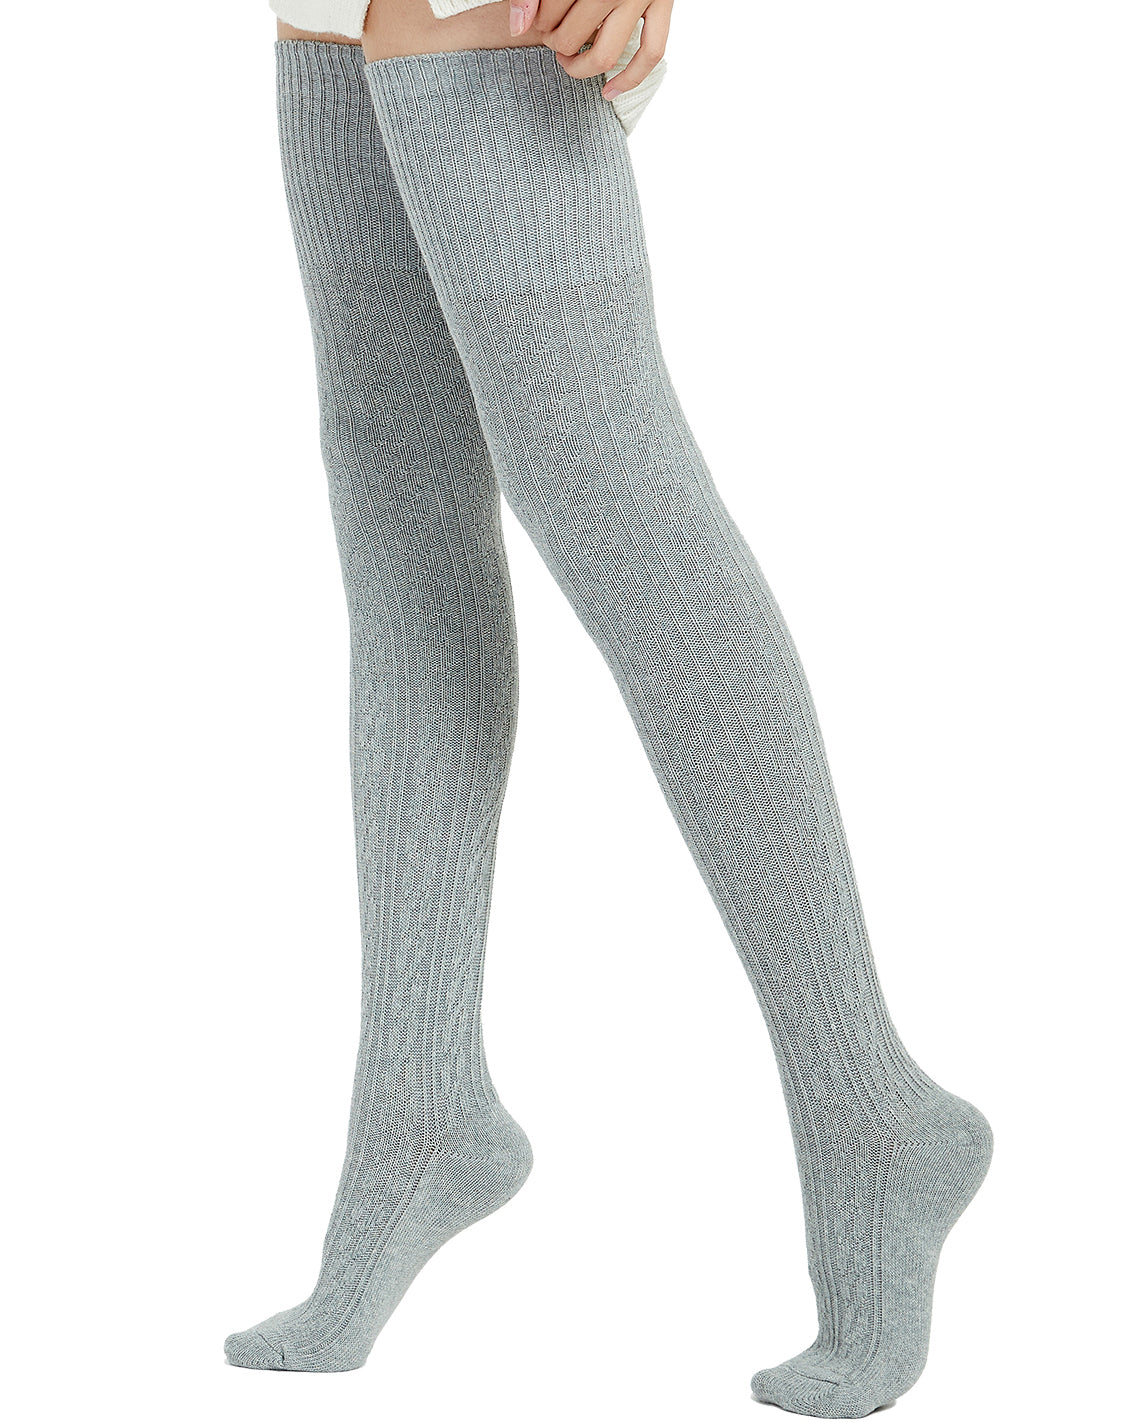 Kayhoma Extra Long Cotton Thigh High Socks